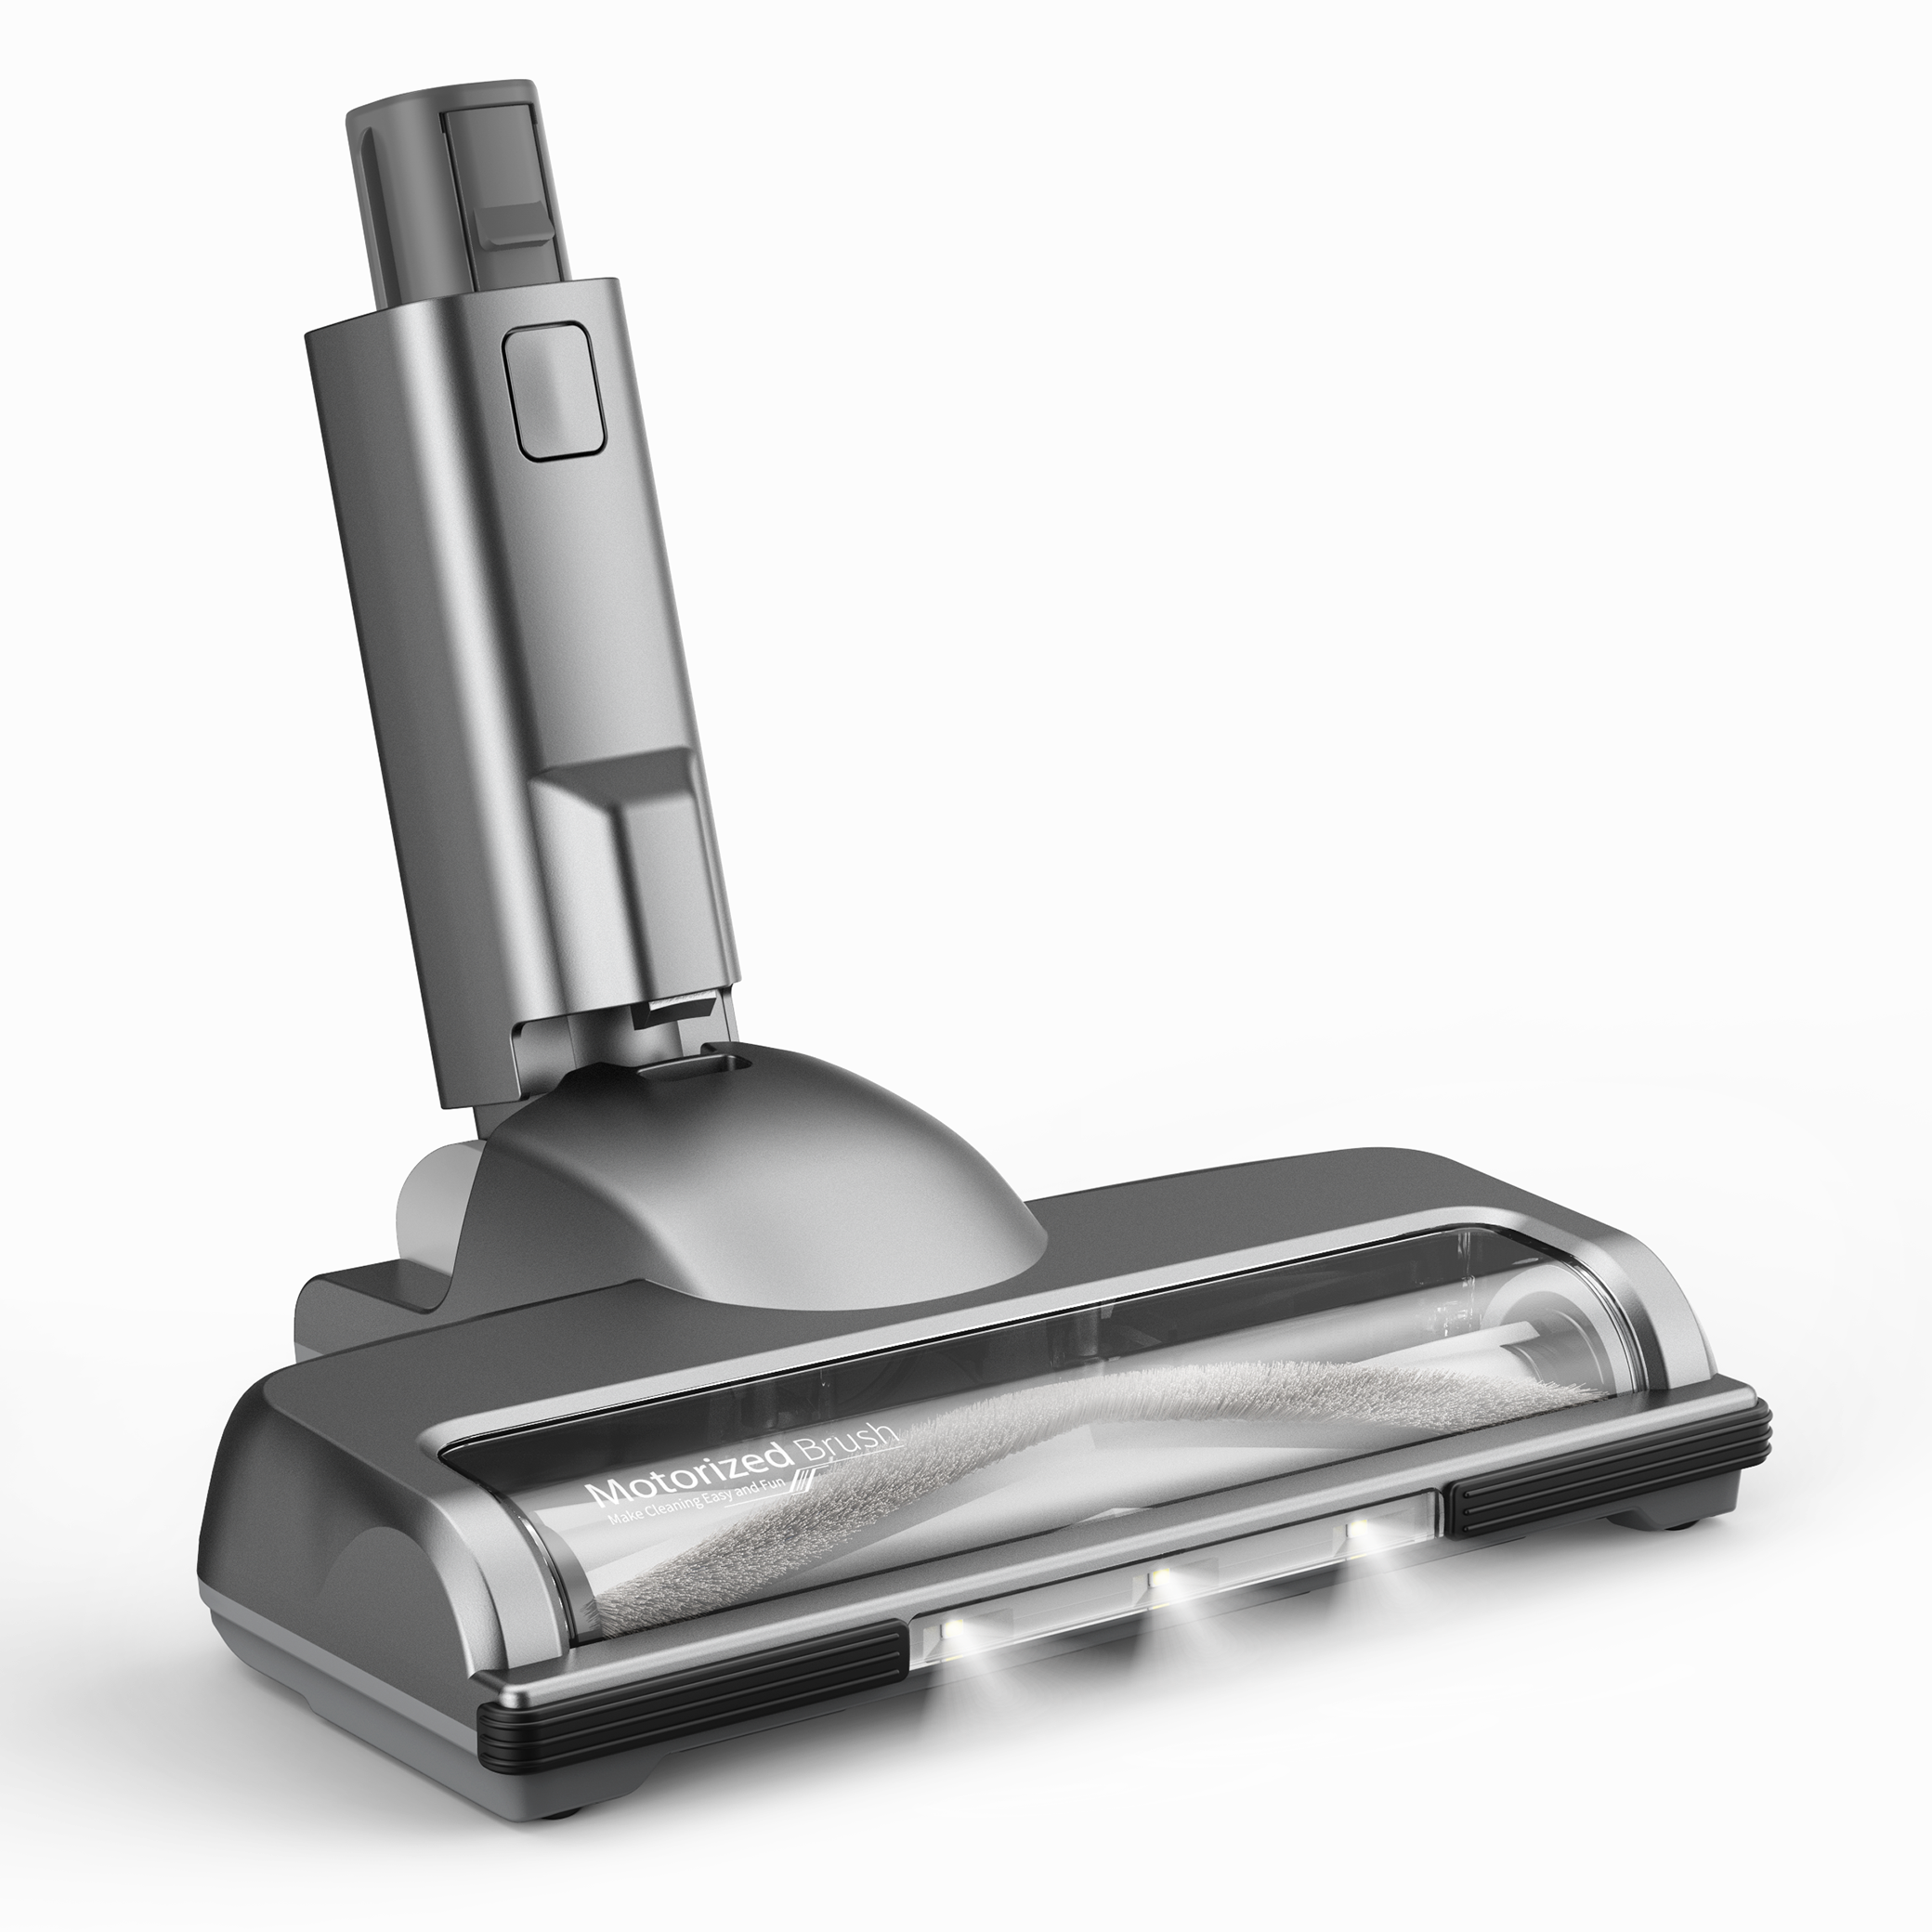 kalado LED Floor Brush for KCV01 Cordless Vacuum Cleaner, Ideal for Indoor Hard Floor, Hard Surface & Carpet Use